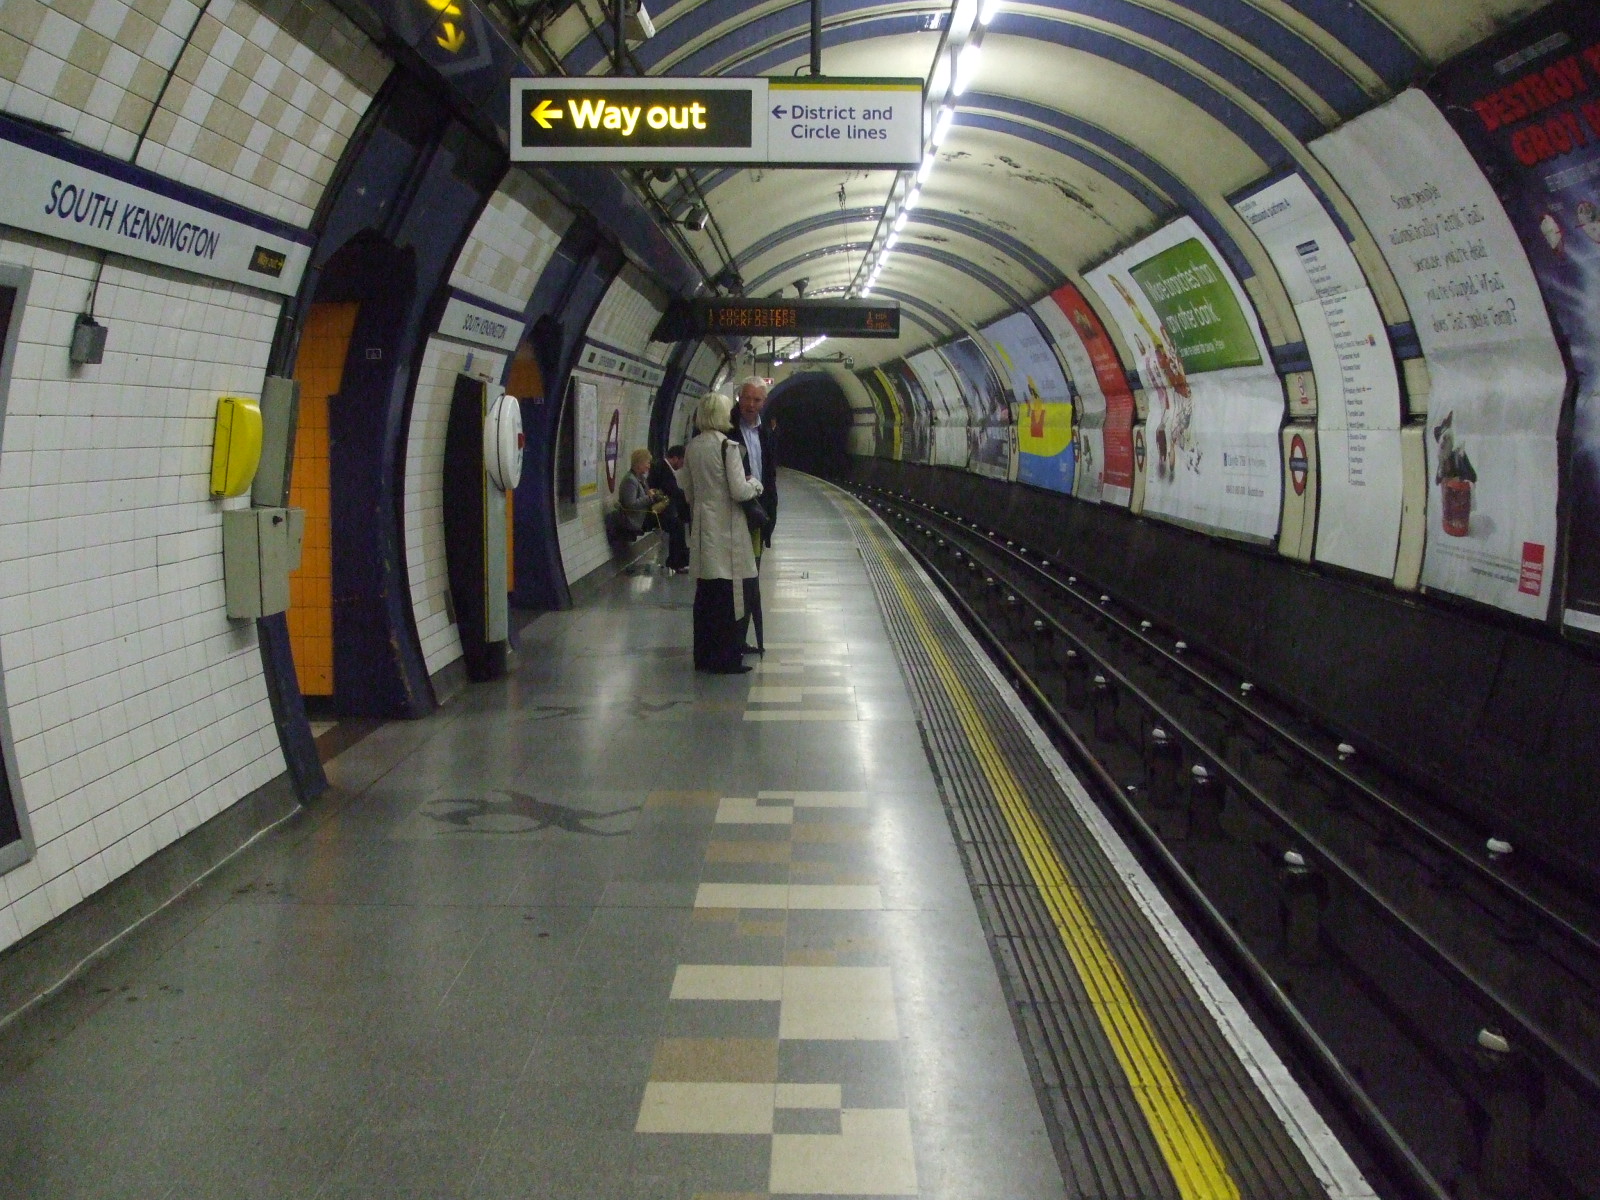 South Kensington Platform